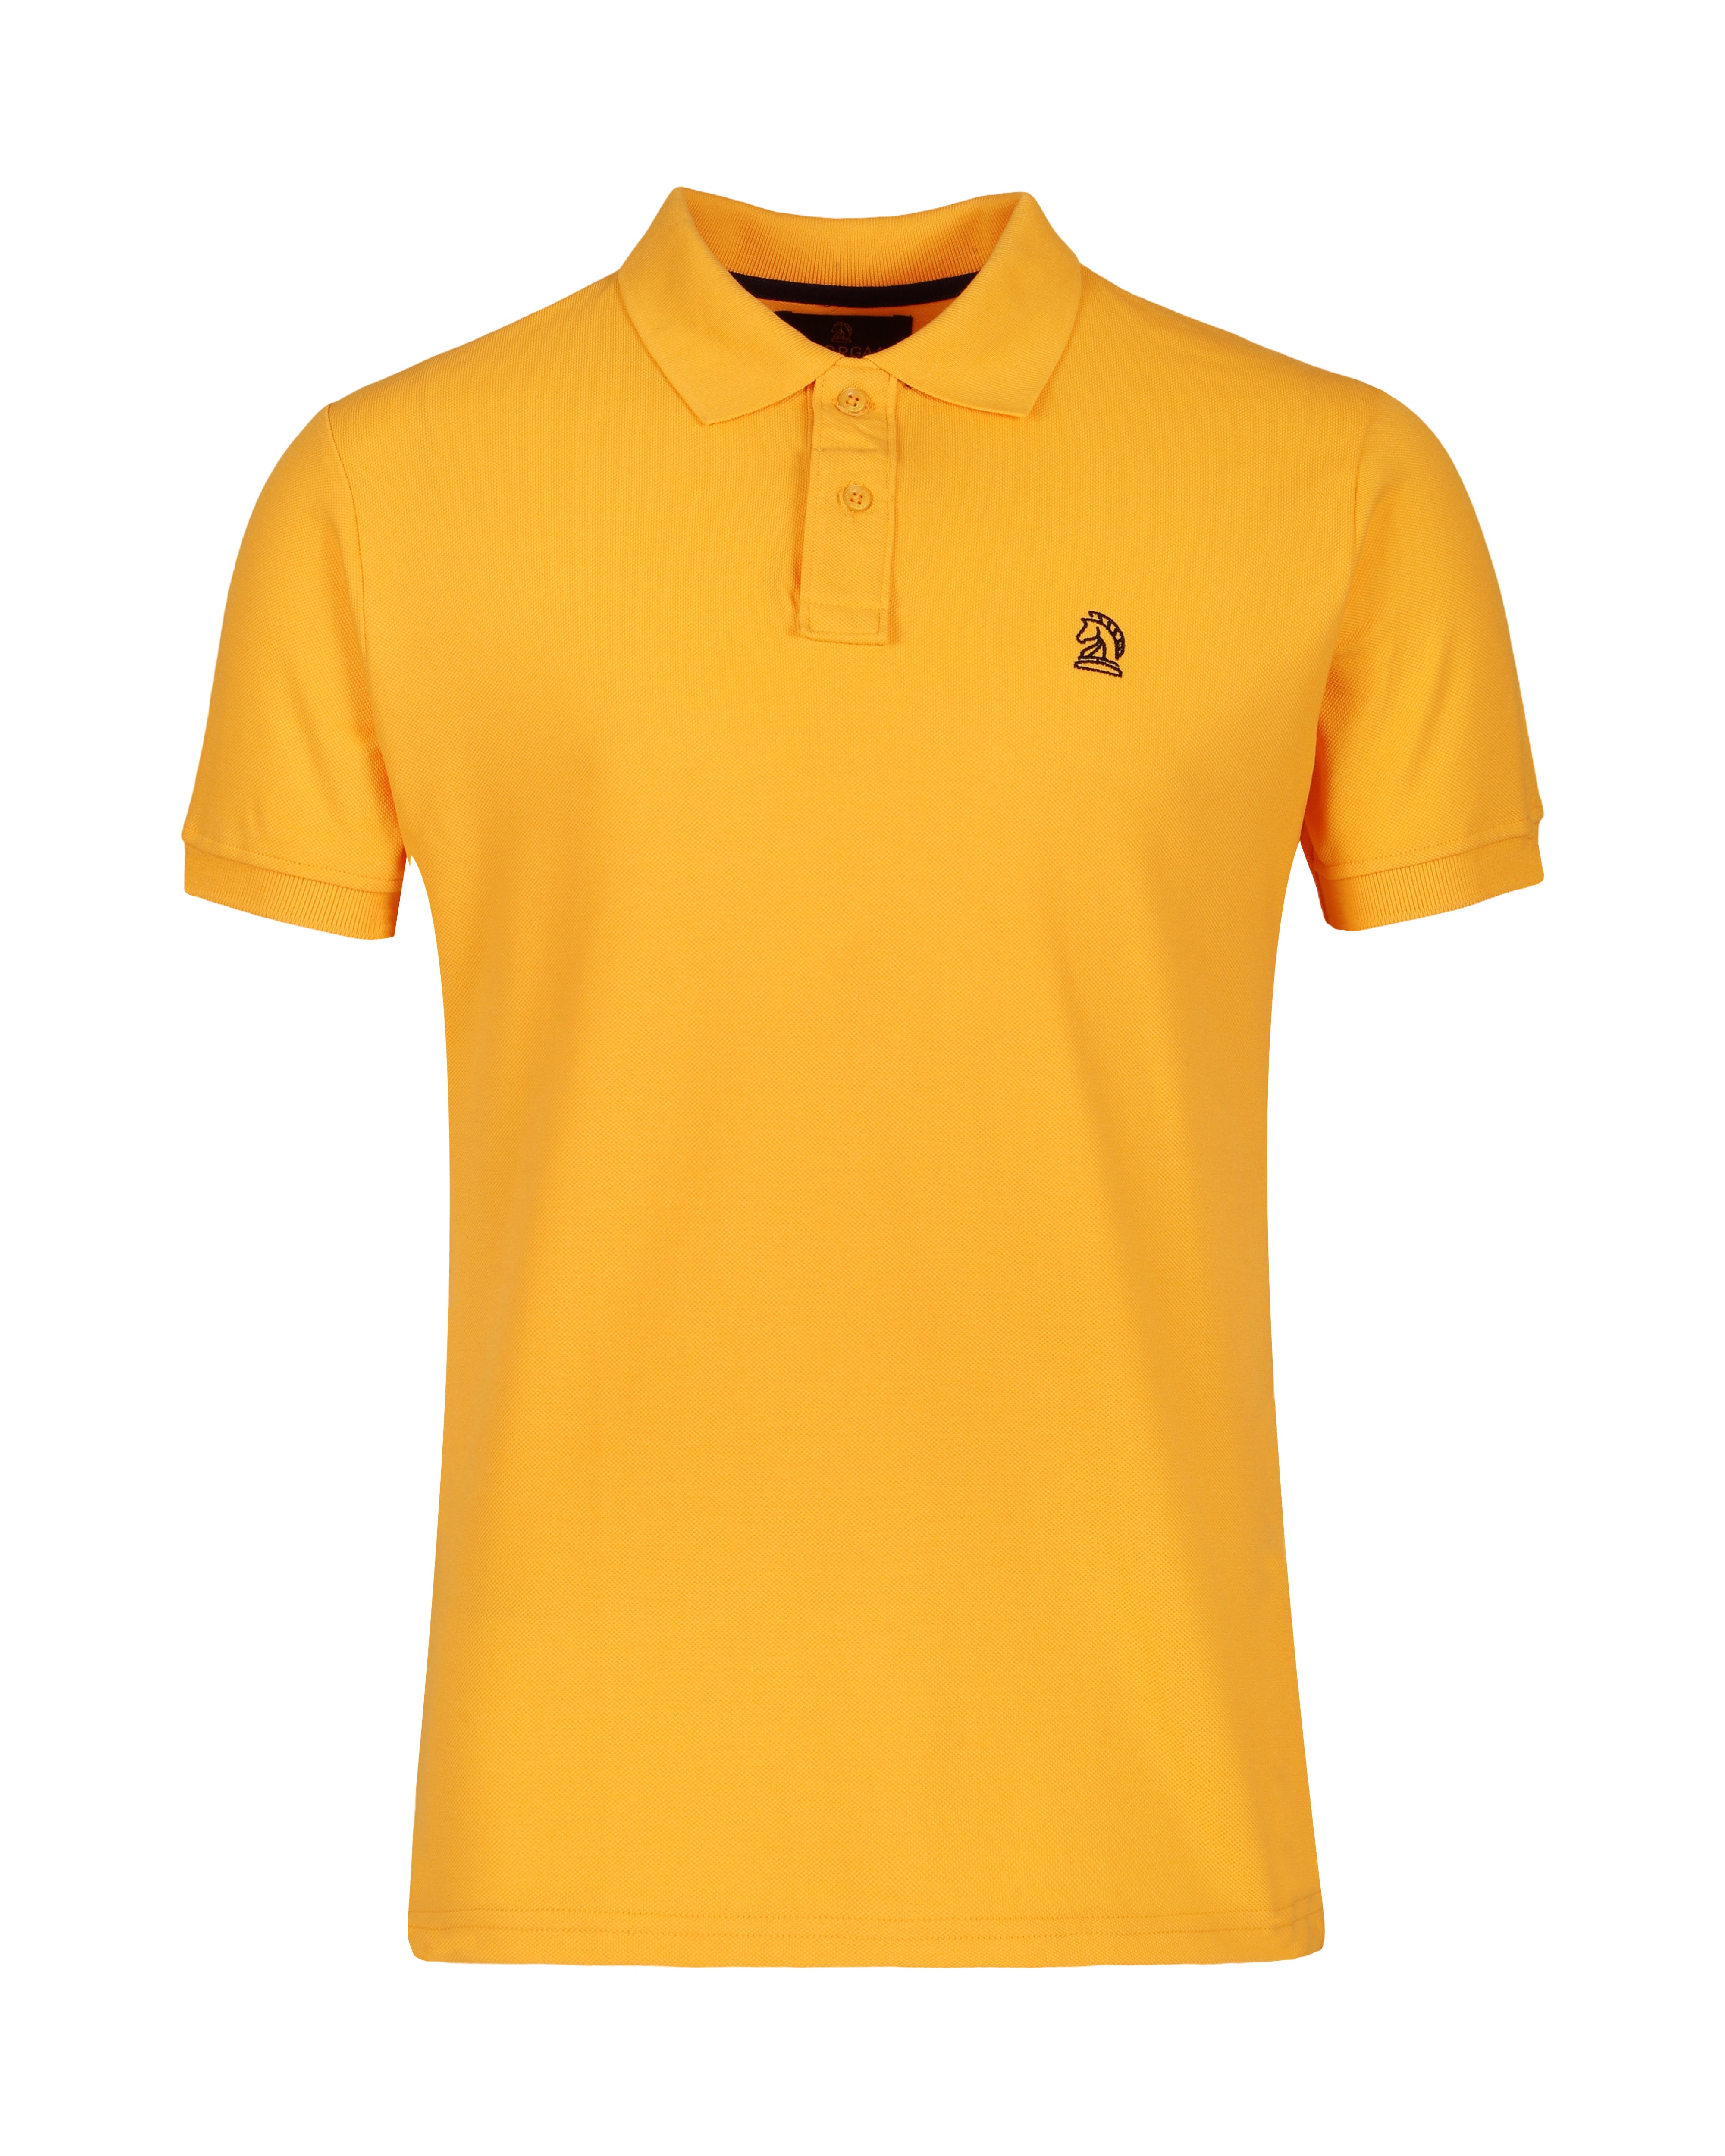 Gold Yellowish Color Premium Cotton T-Shirt